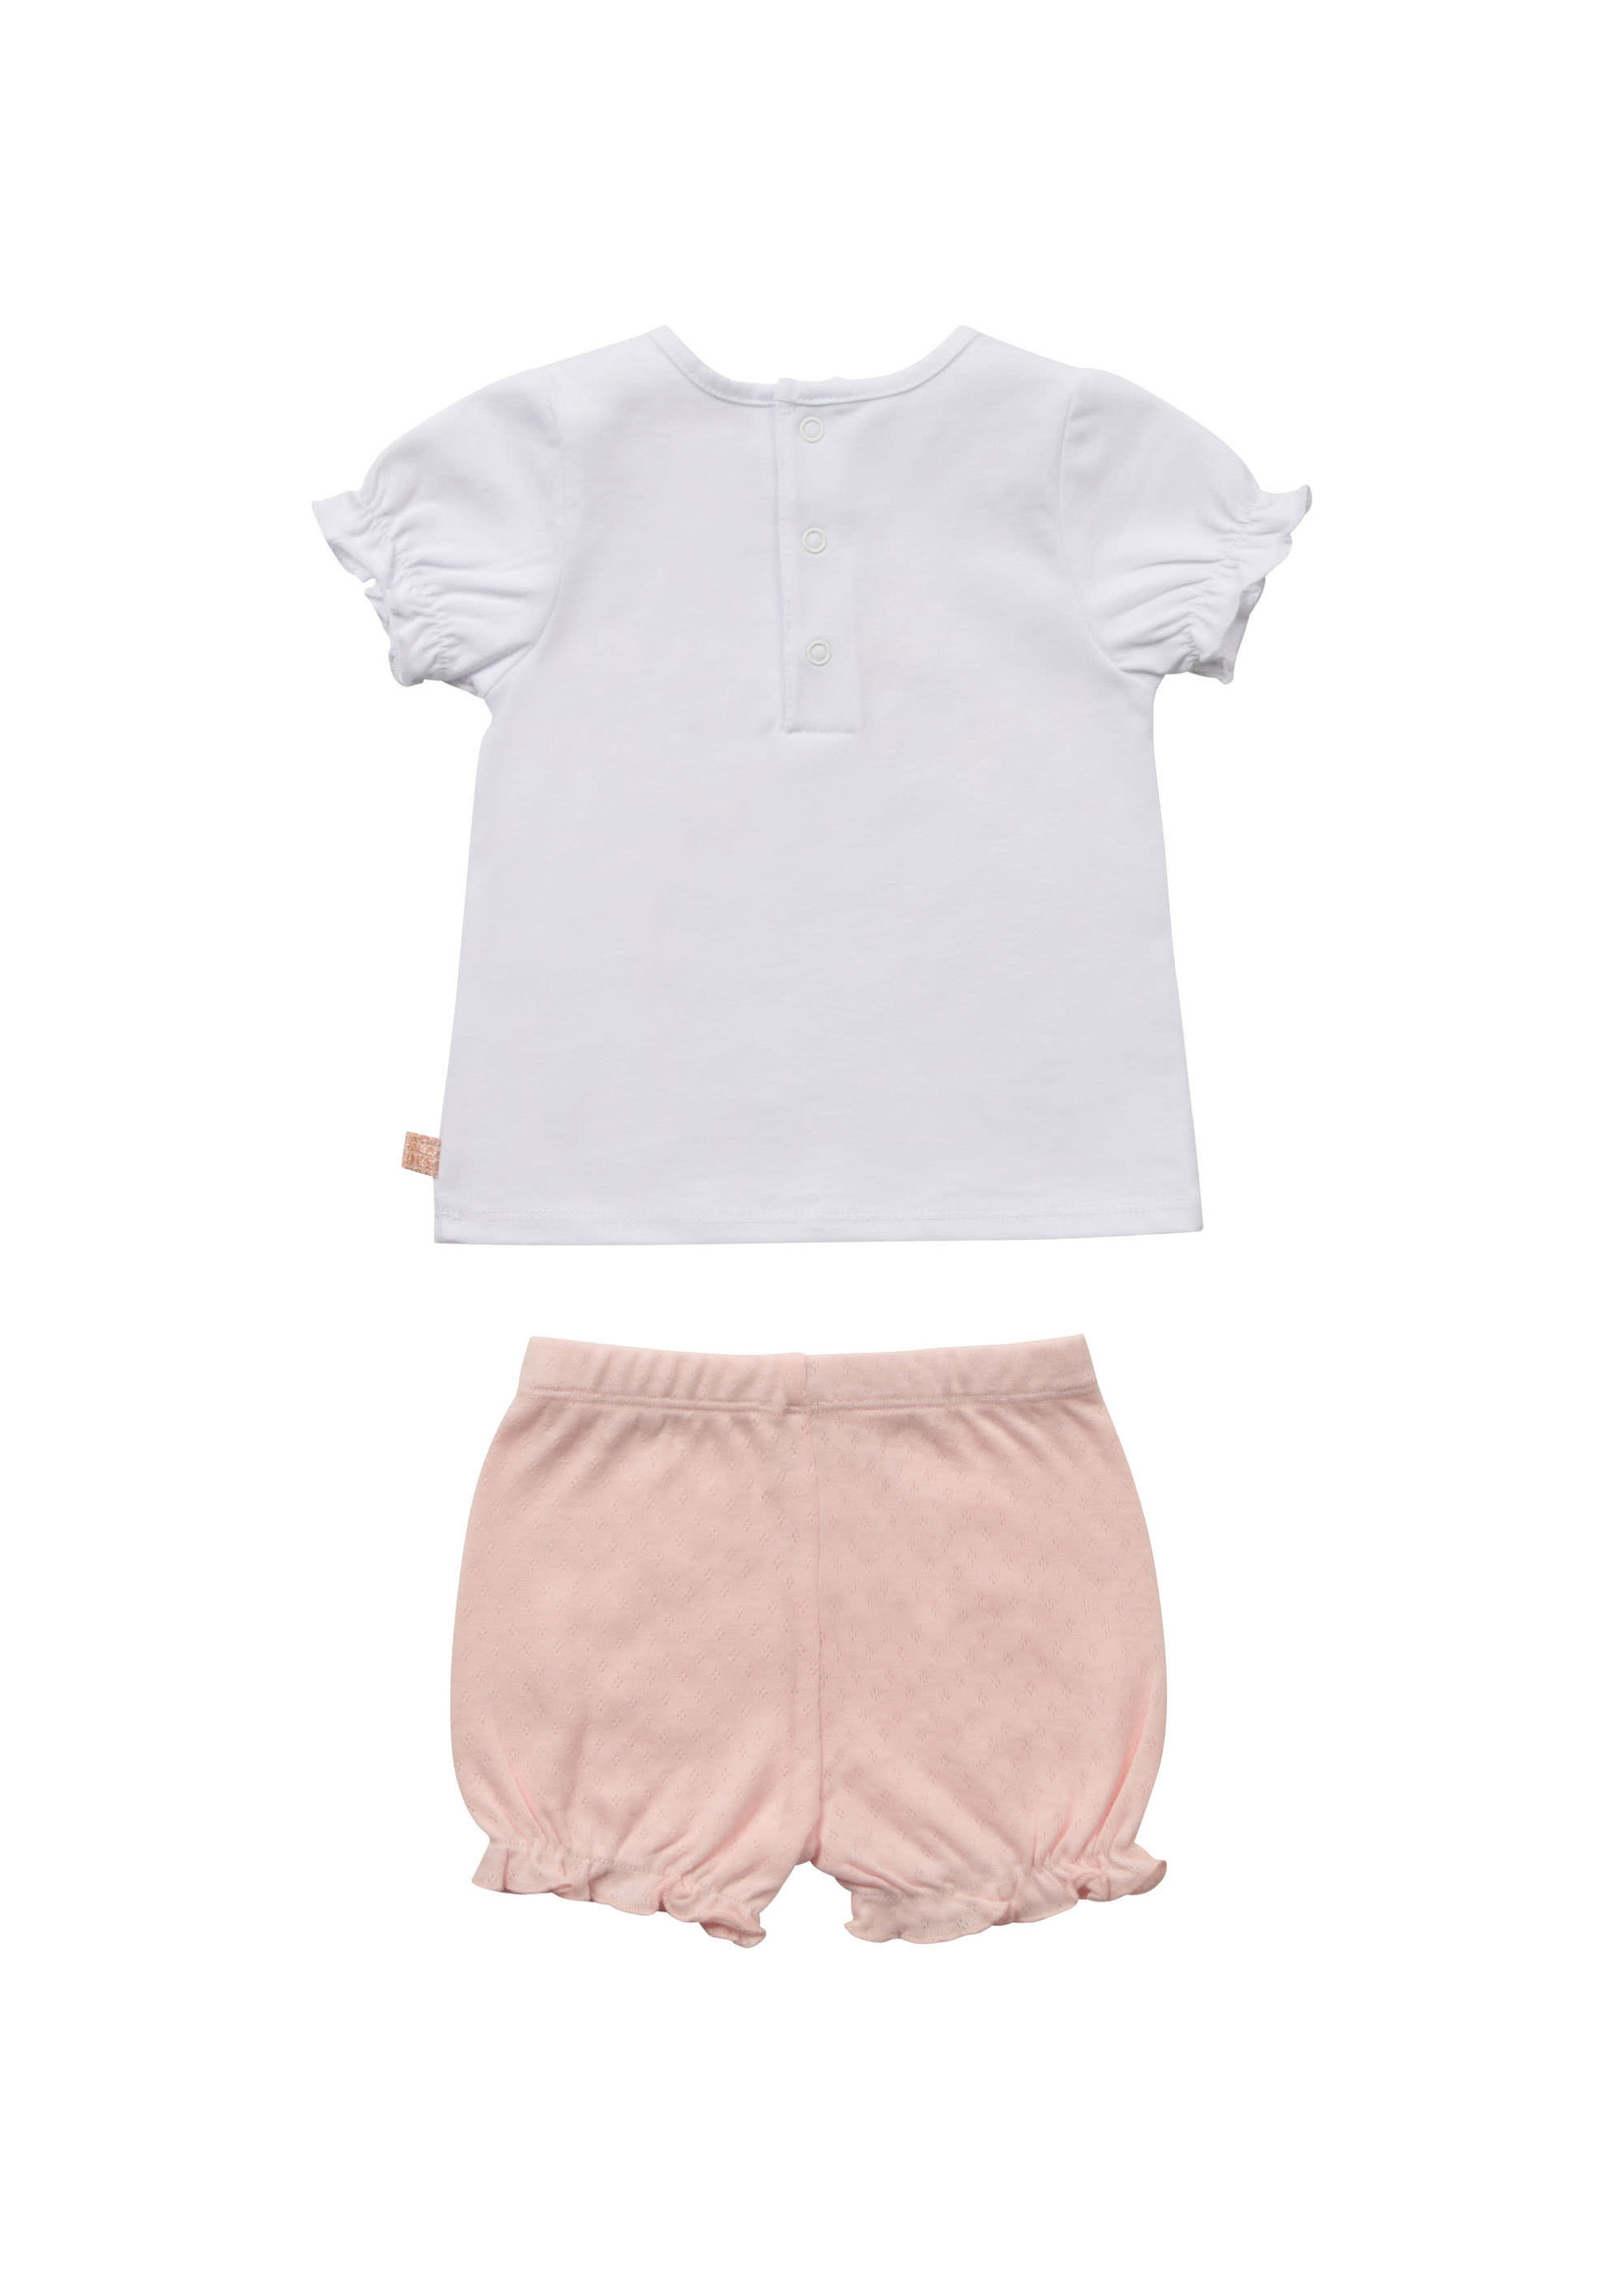 CARREMENT BEAU 2 delige set Tshirt + Bloomer wit/roze